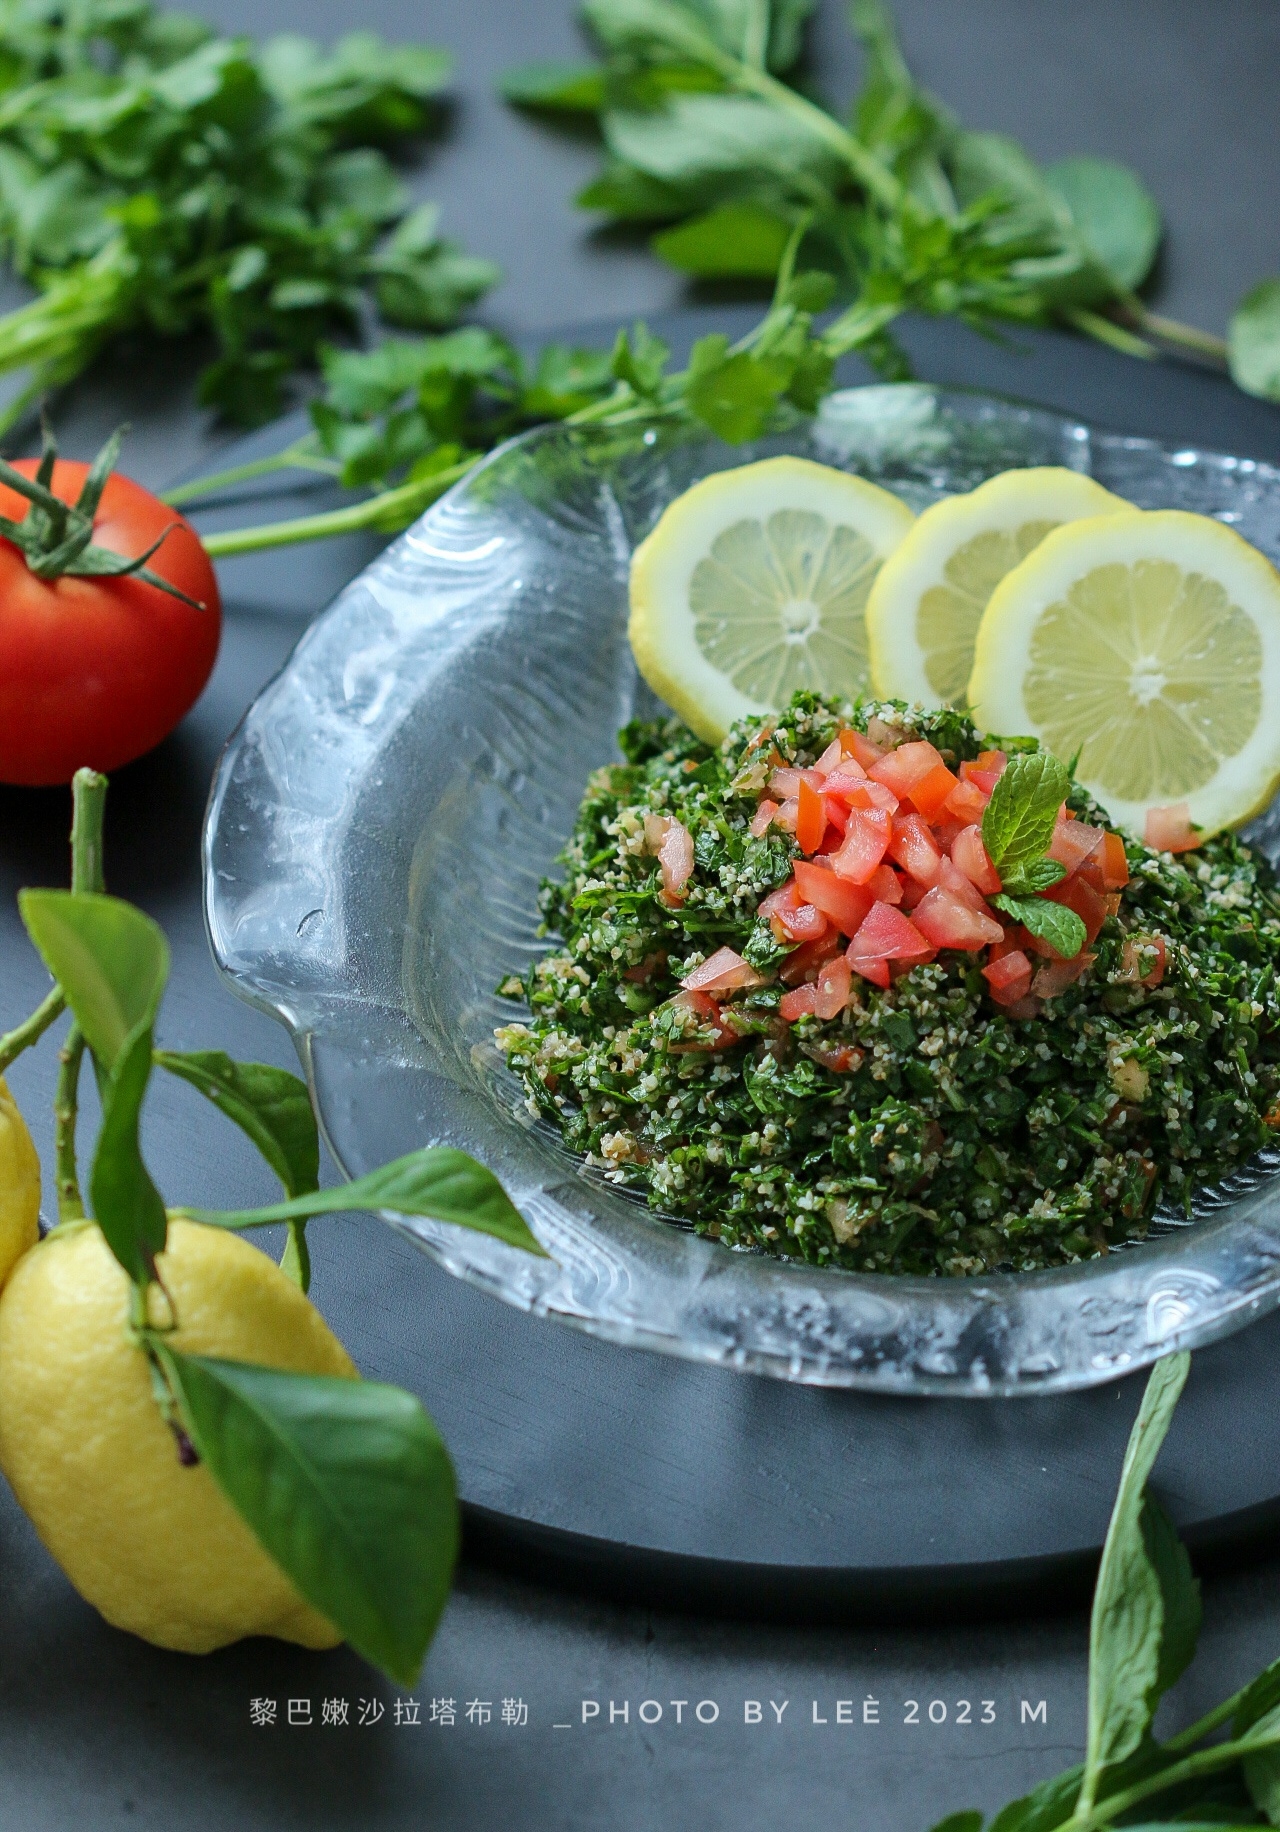 黎巴嫩沙拉塔布勒Tabbouleh salad